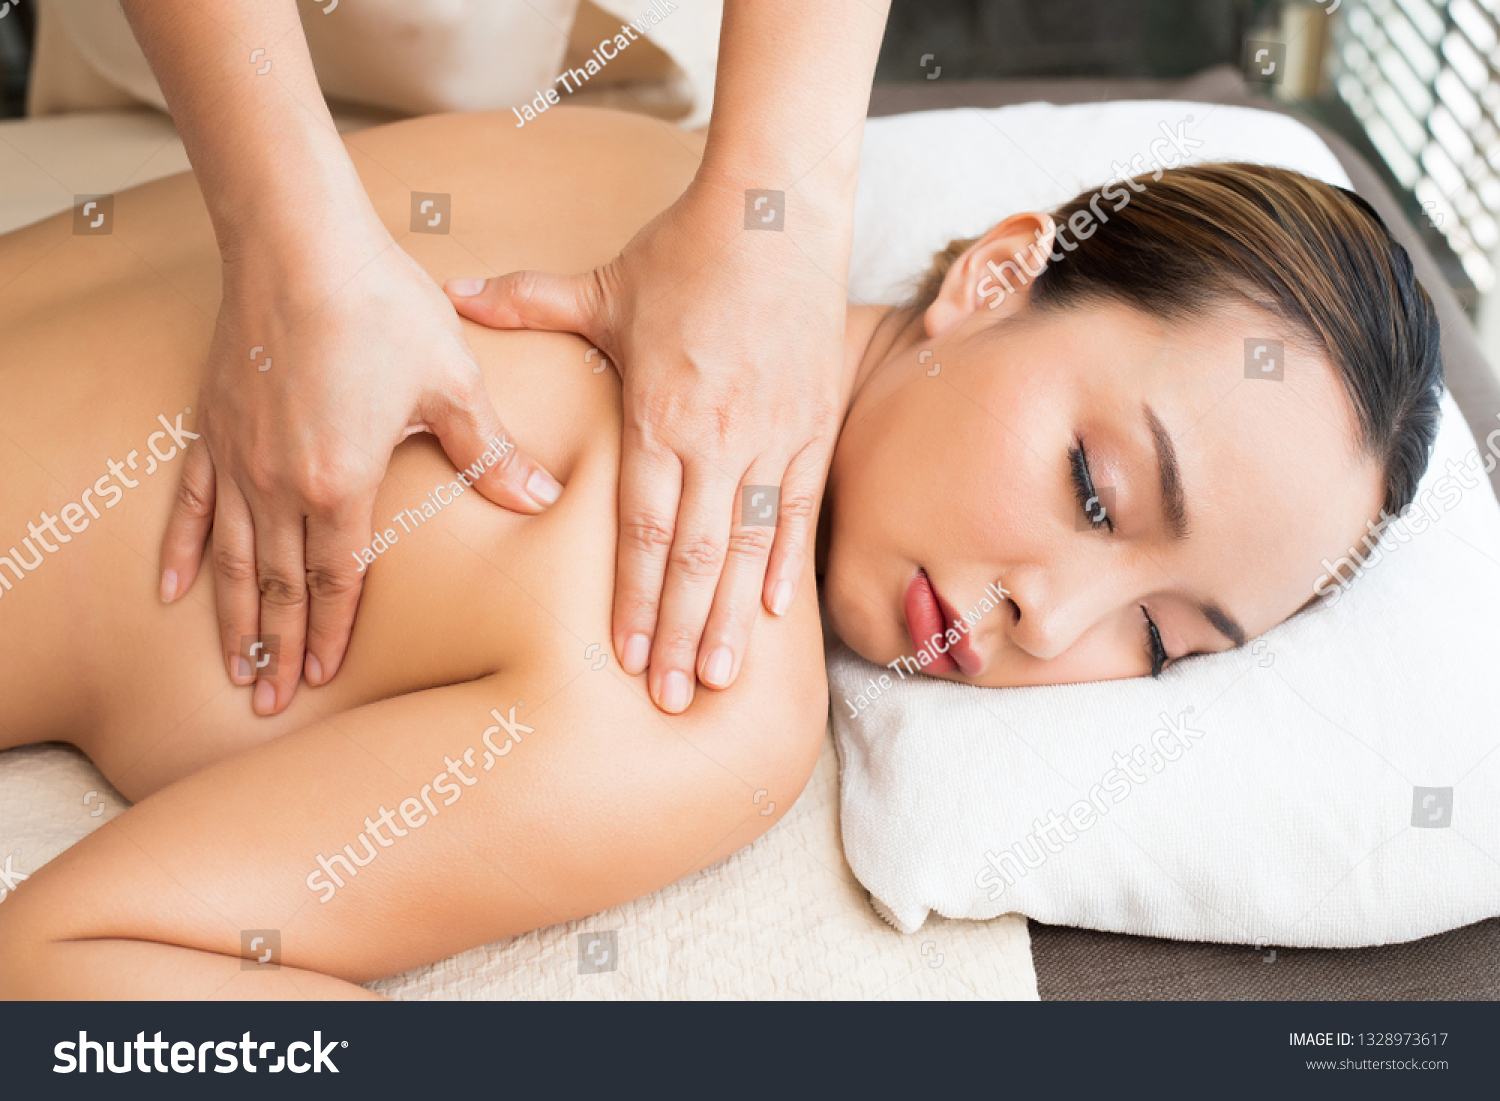 corey hackman add photo naked for a massage